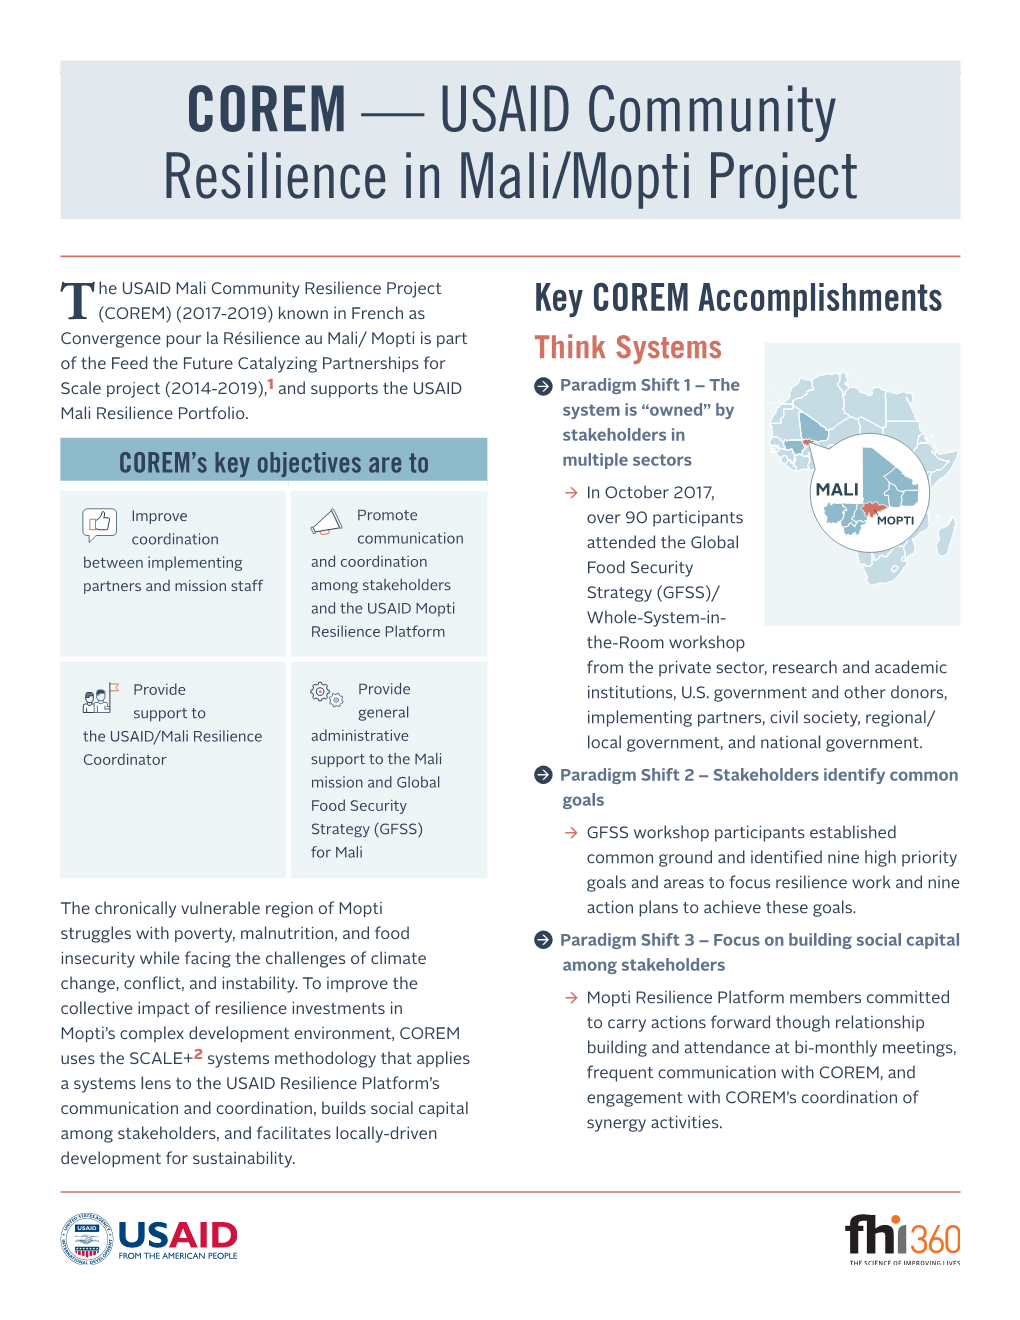 COREM — USAID Community Resilience in Mali/Mopti Project